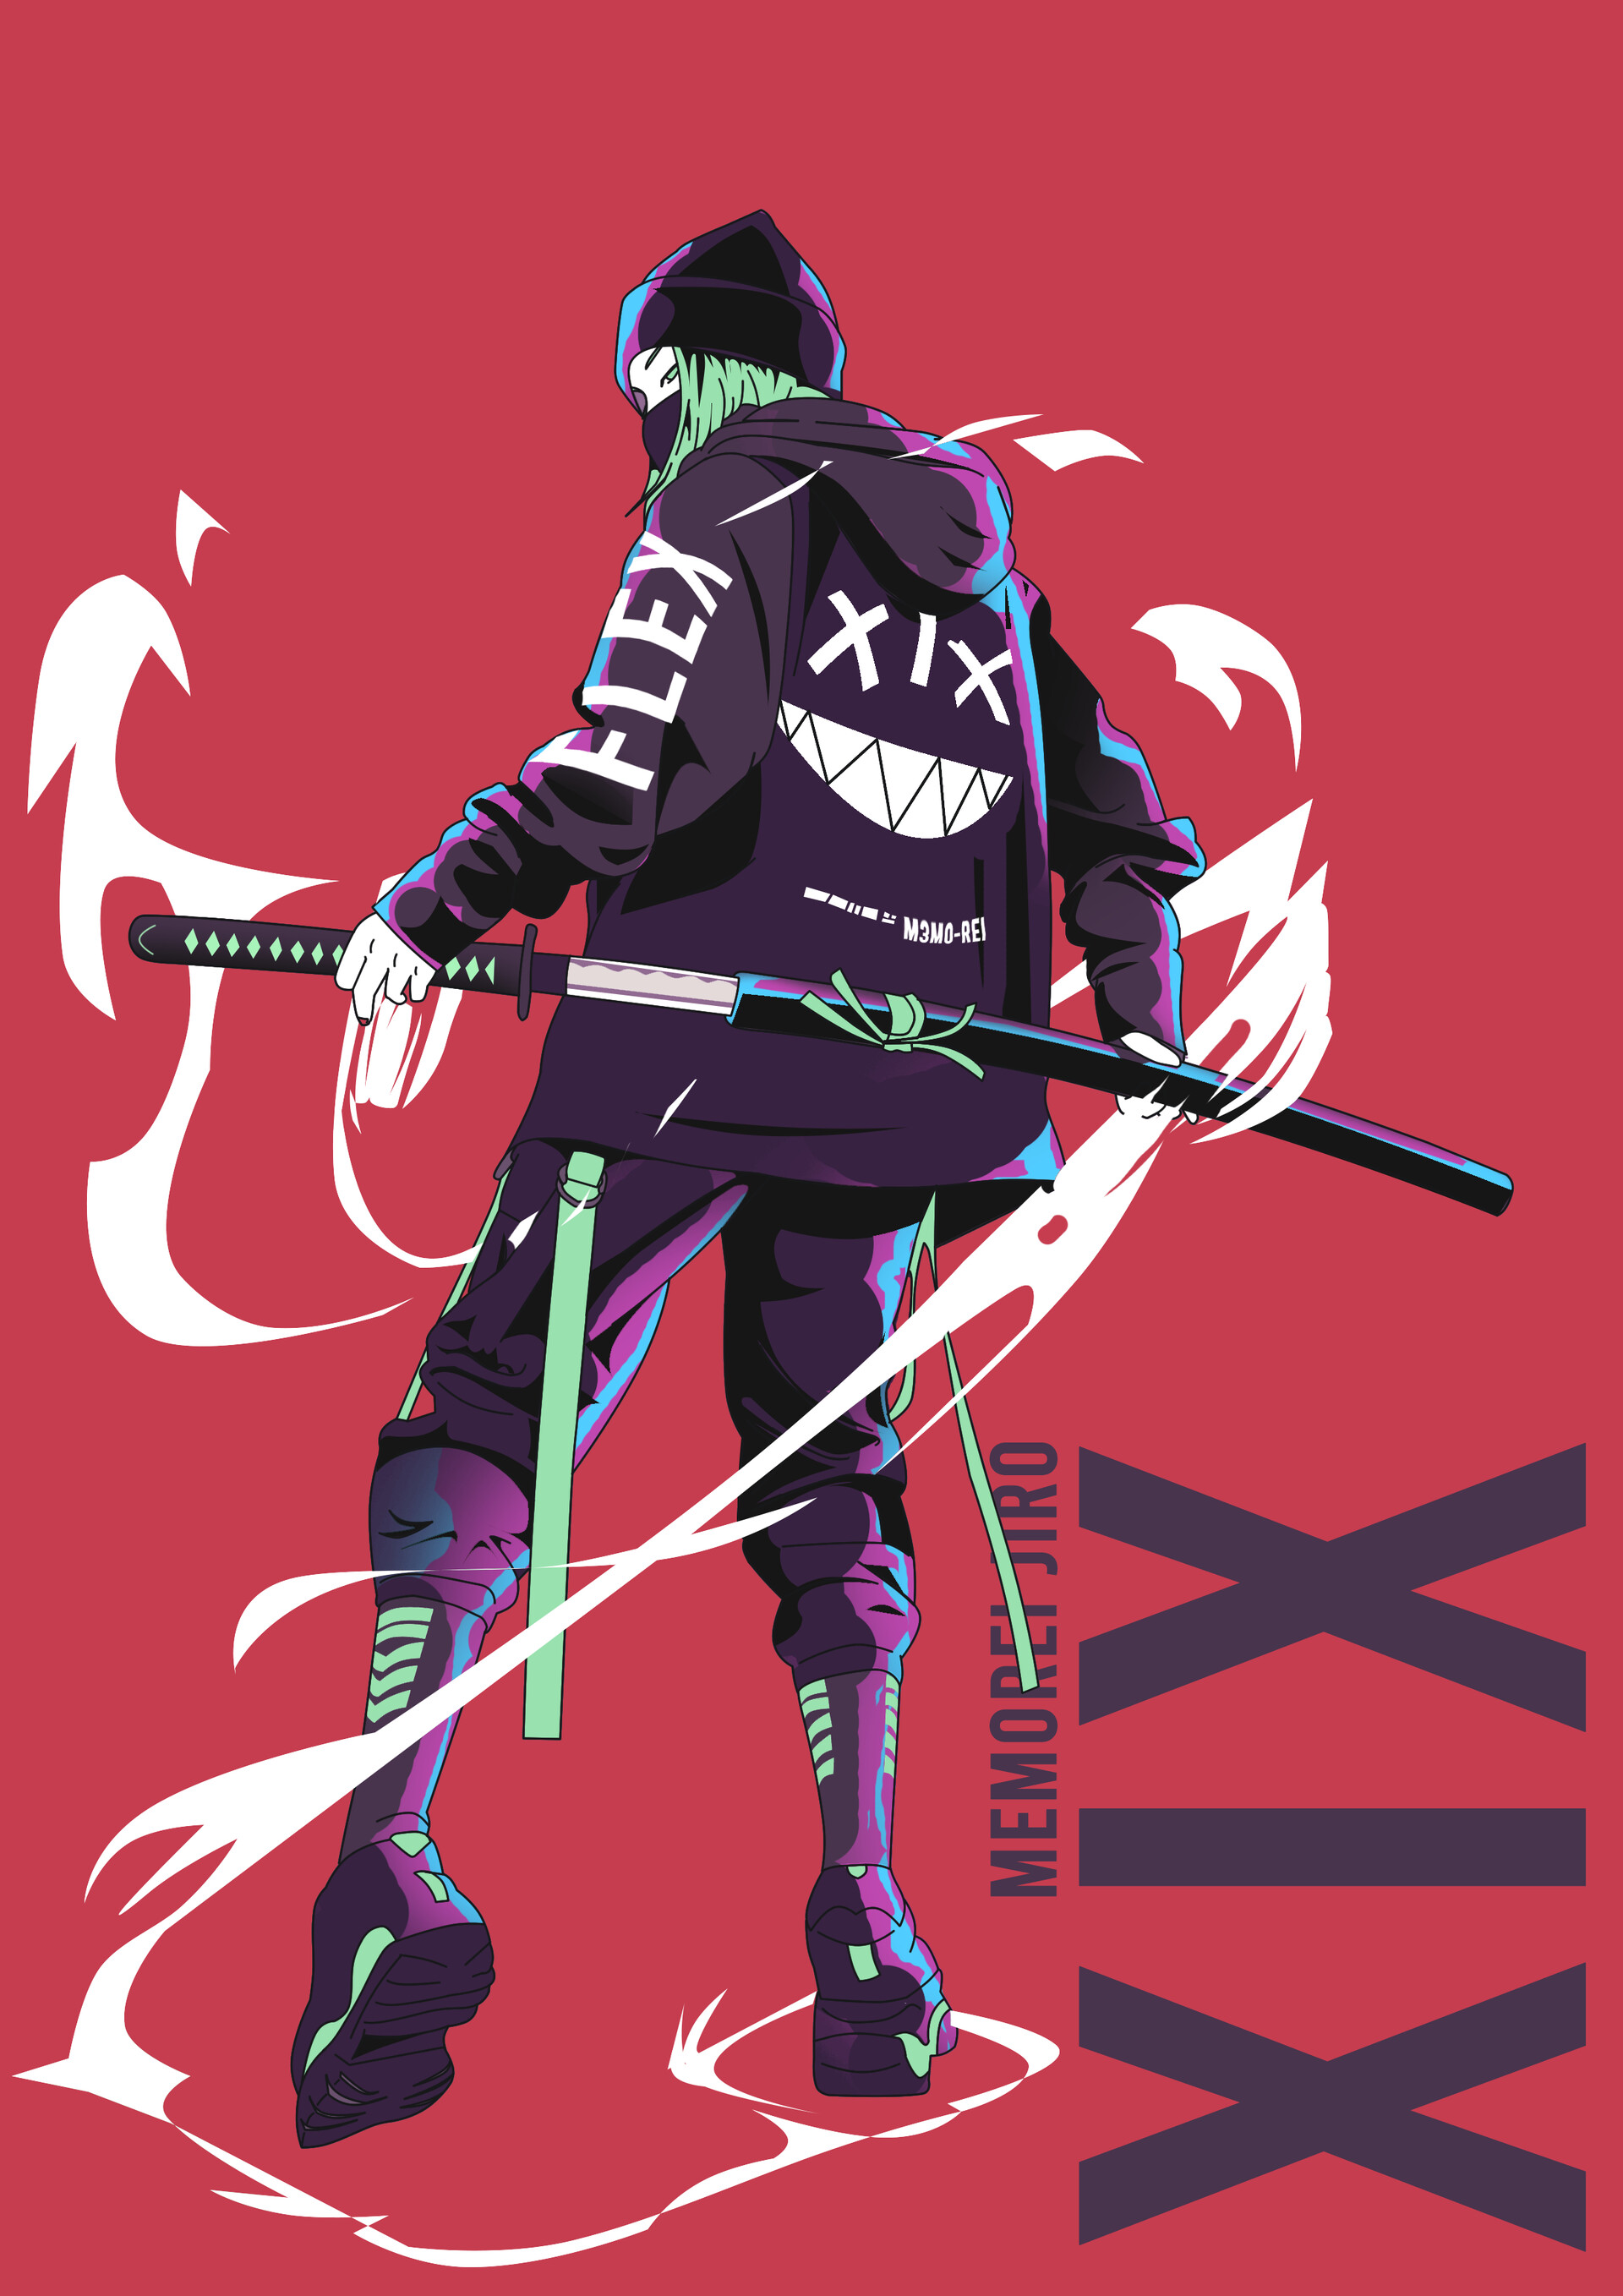 Anime samurai cyberpunk